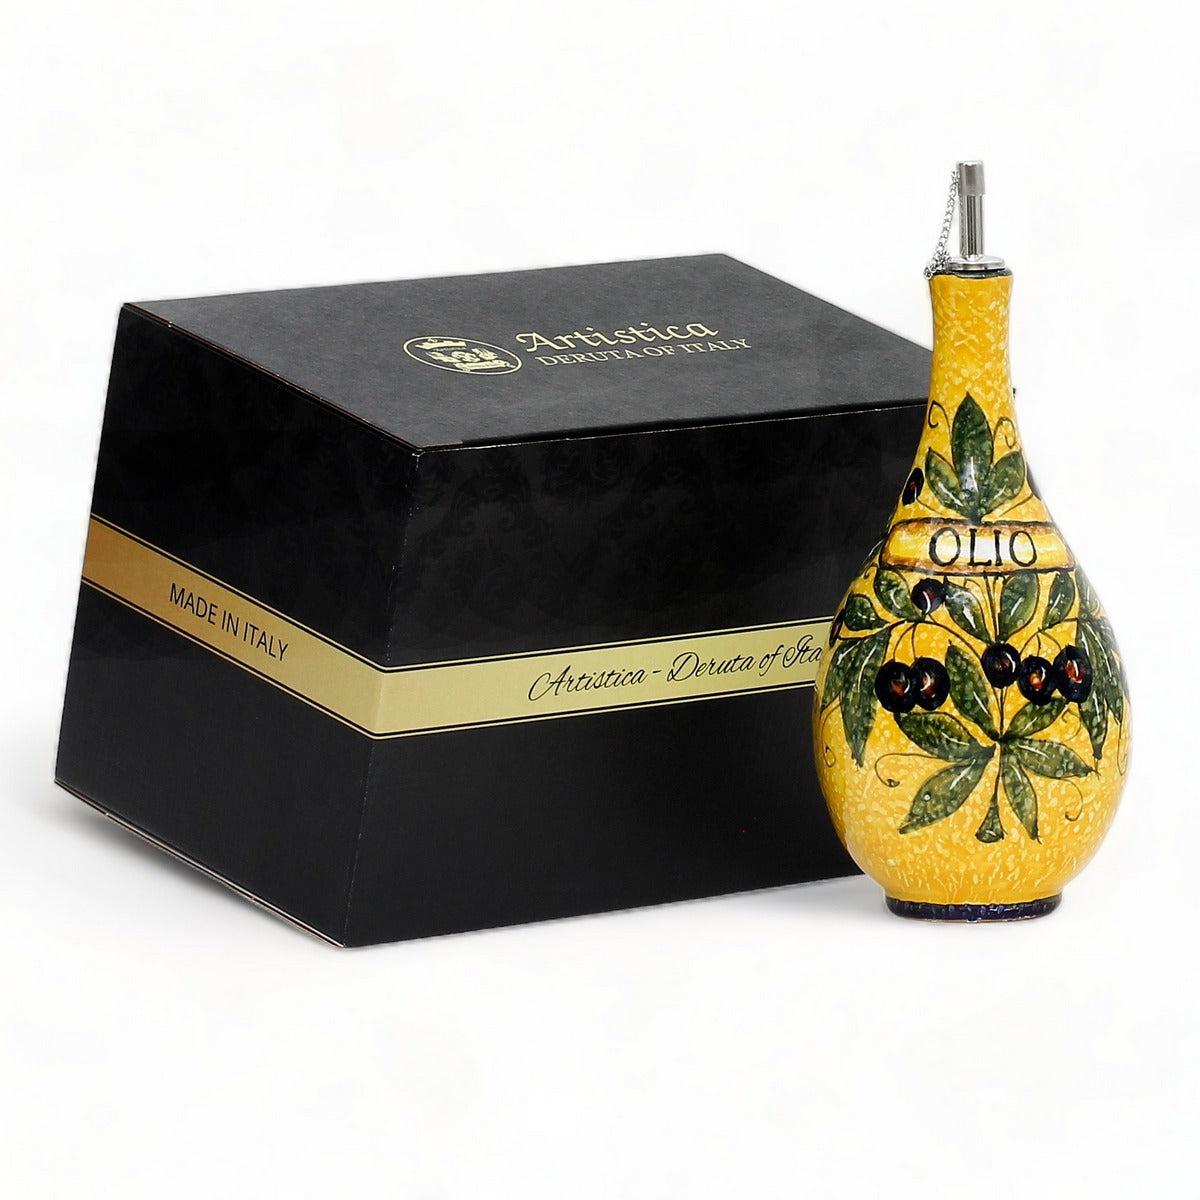 GIFT BOX: With authentic Deruta hand painted ceramic - OLIVE OIL DISPENSER BOTTLE Bucciato Olivo Design